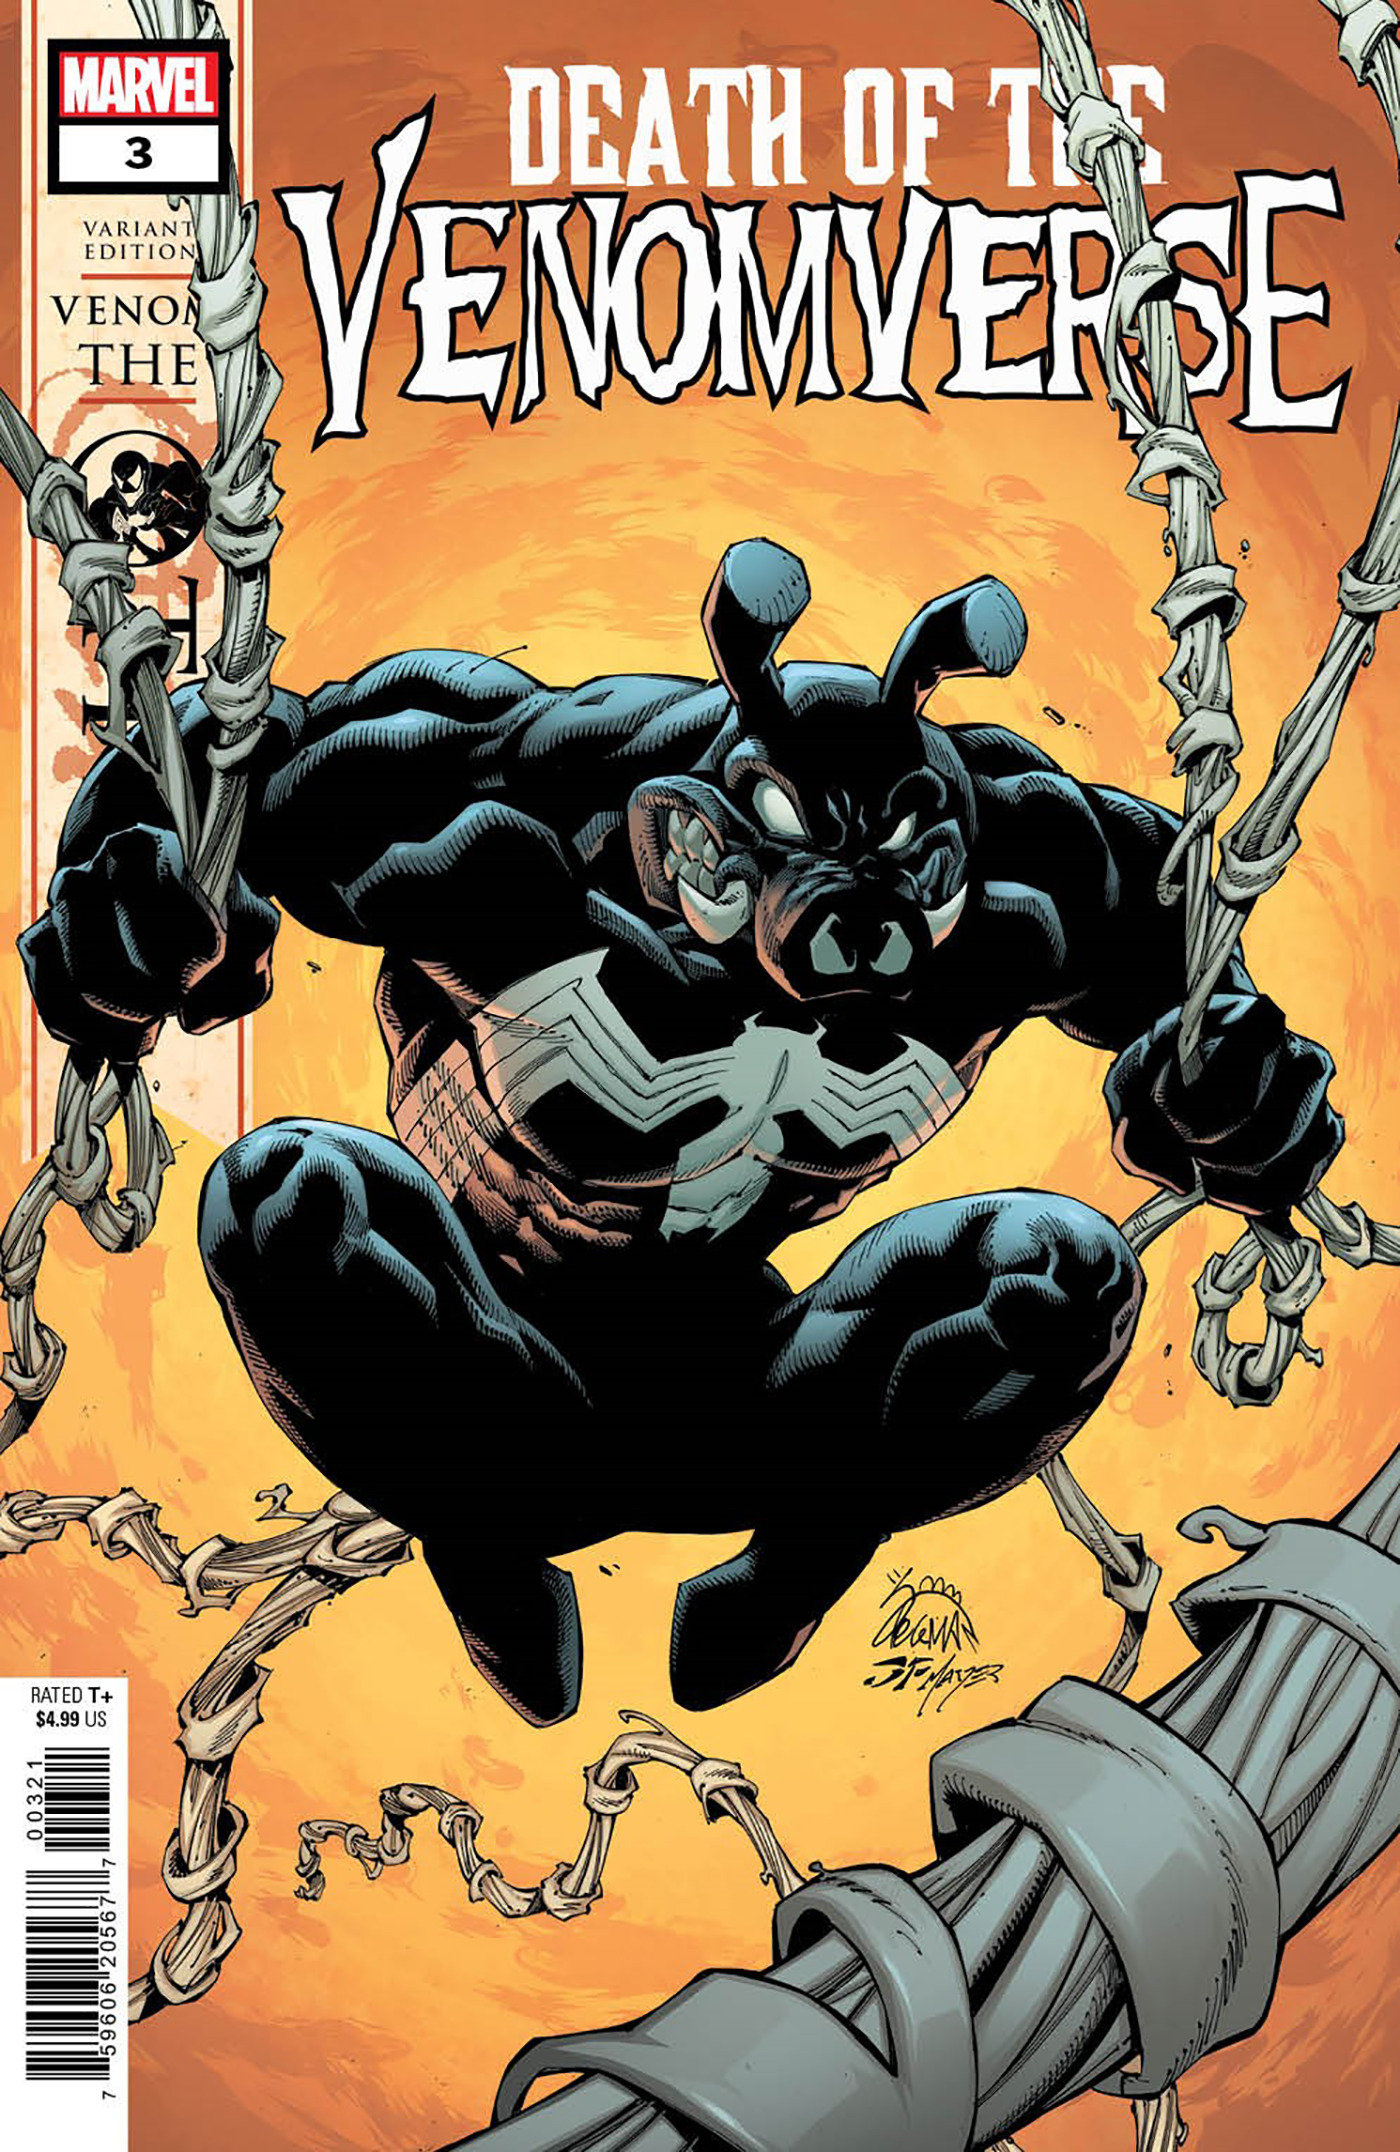 Death of the Venomverse #3 Ryan Stegman Venom The Other Variant